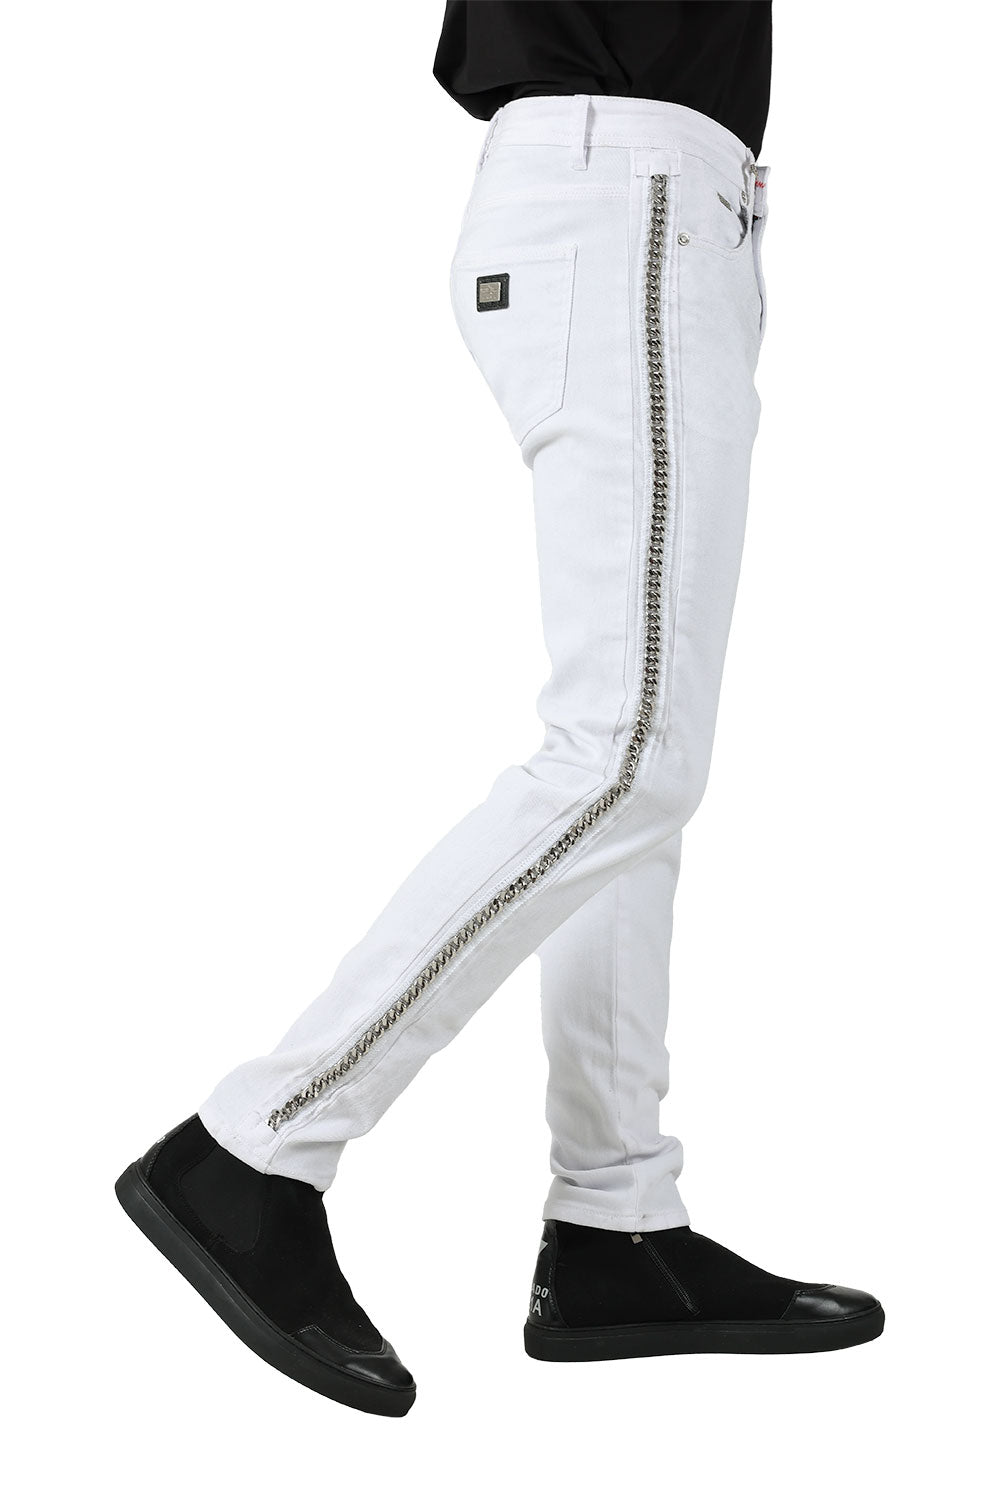 BARABAS Men's Sparkly Glittery Chain Design Denim Jeans SN8855 White Silver